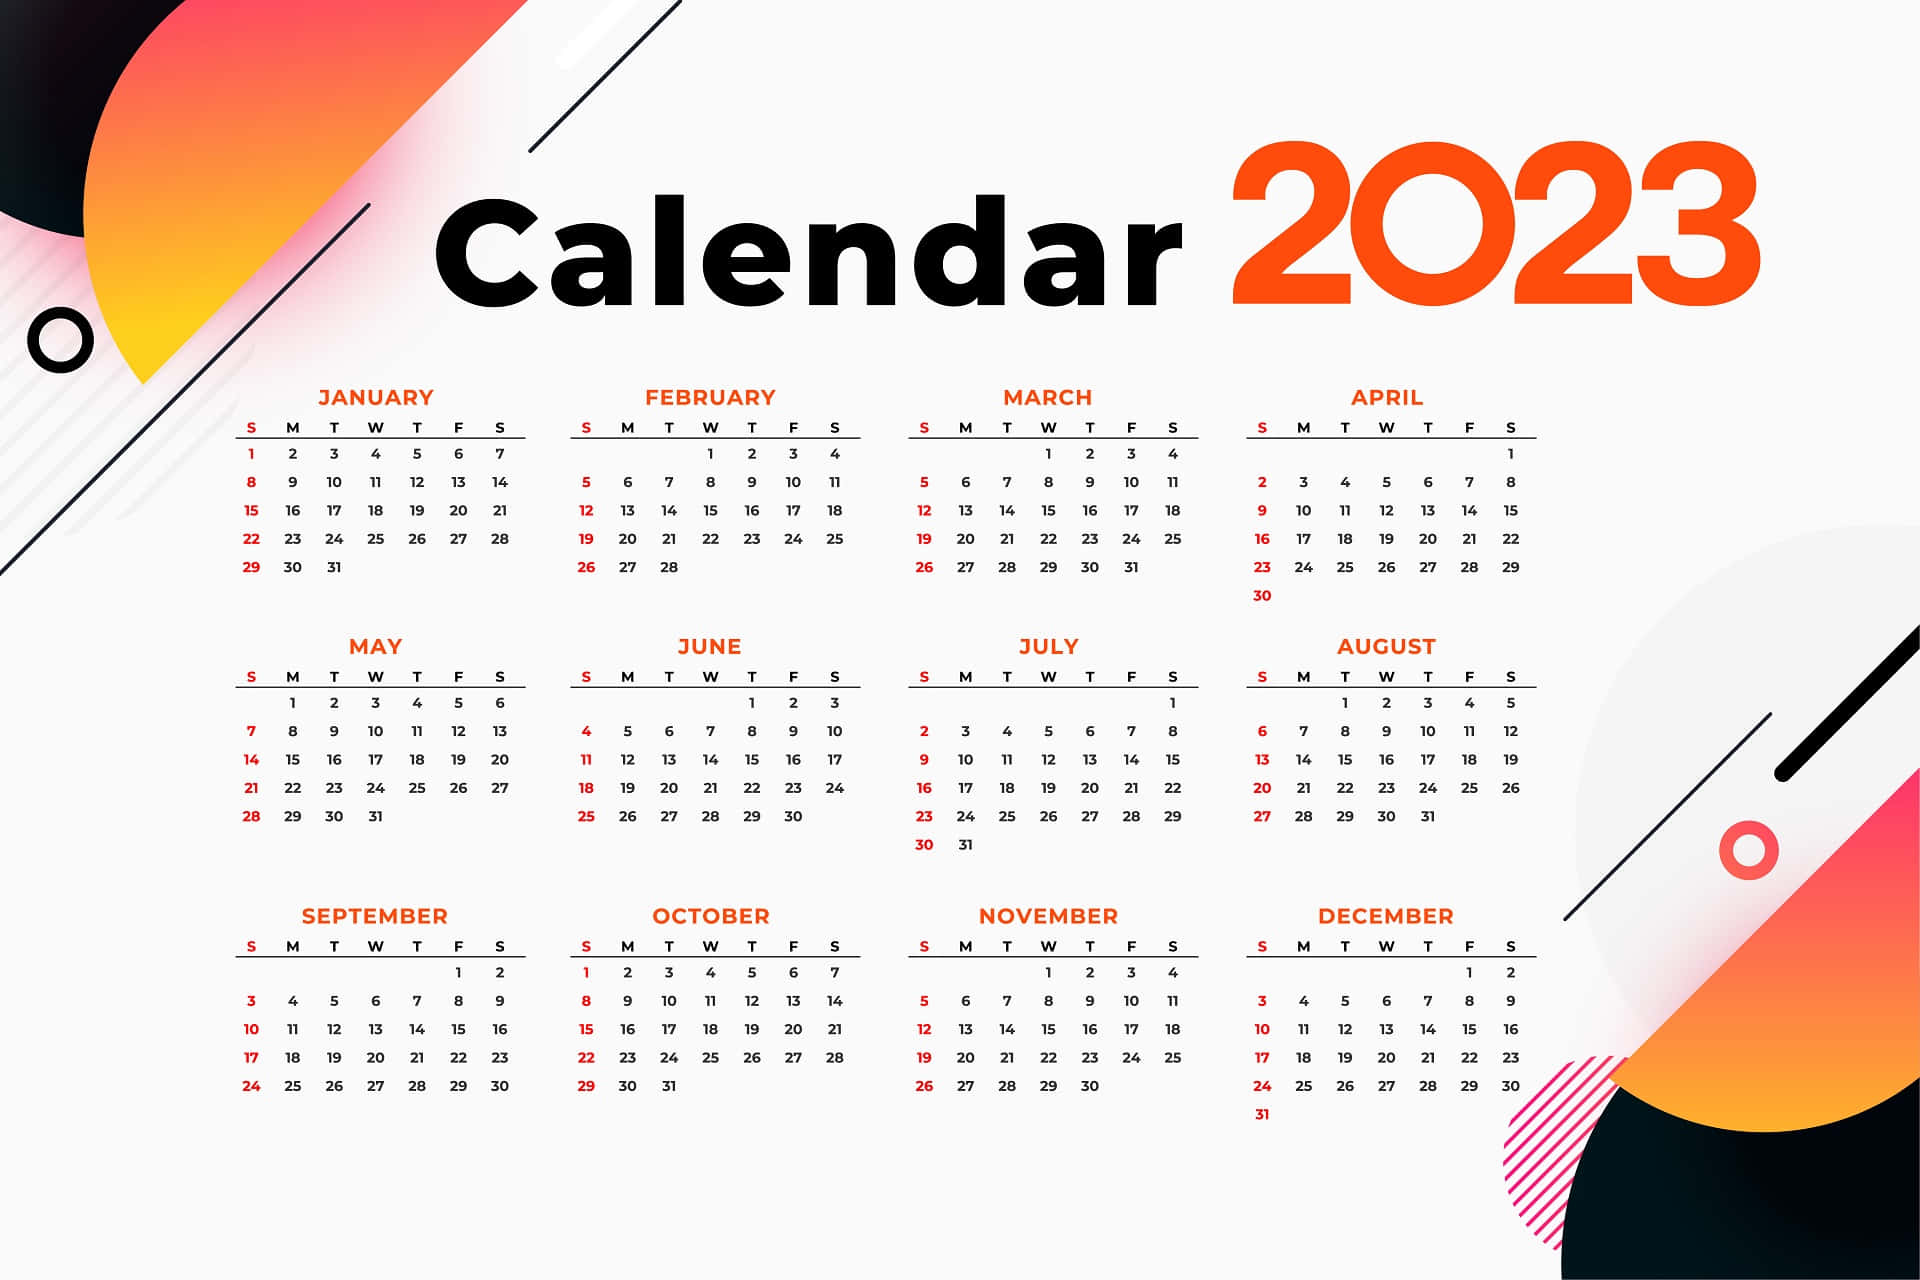 Enkalender Med Ordet 2020 På Det.